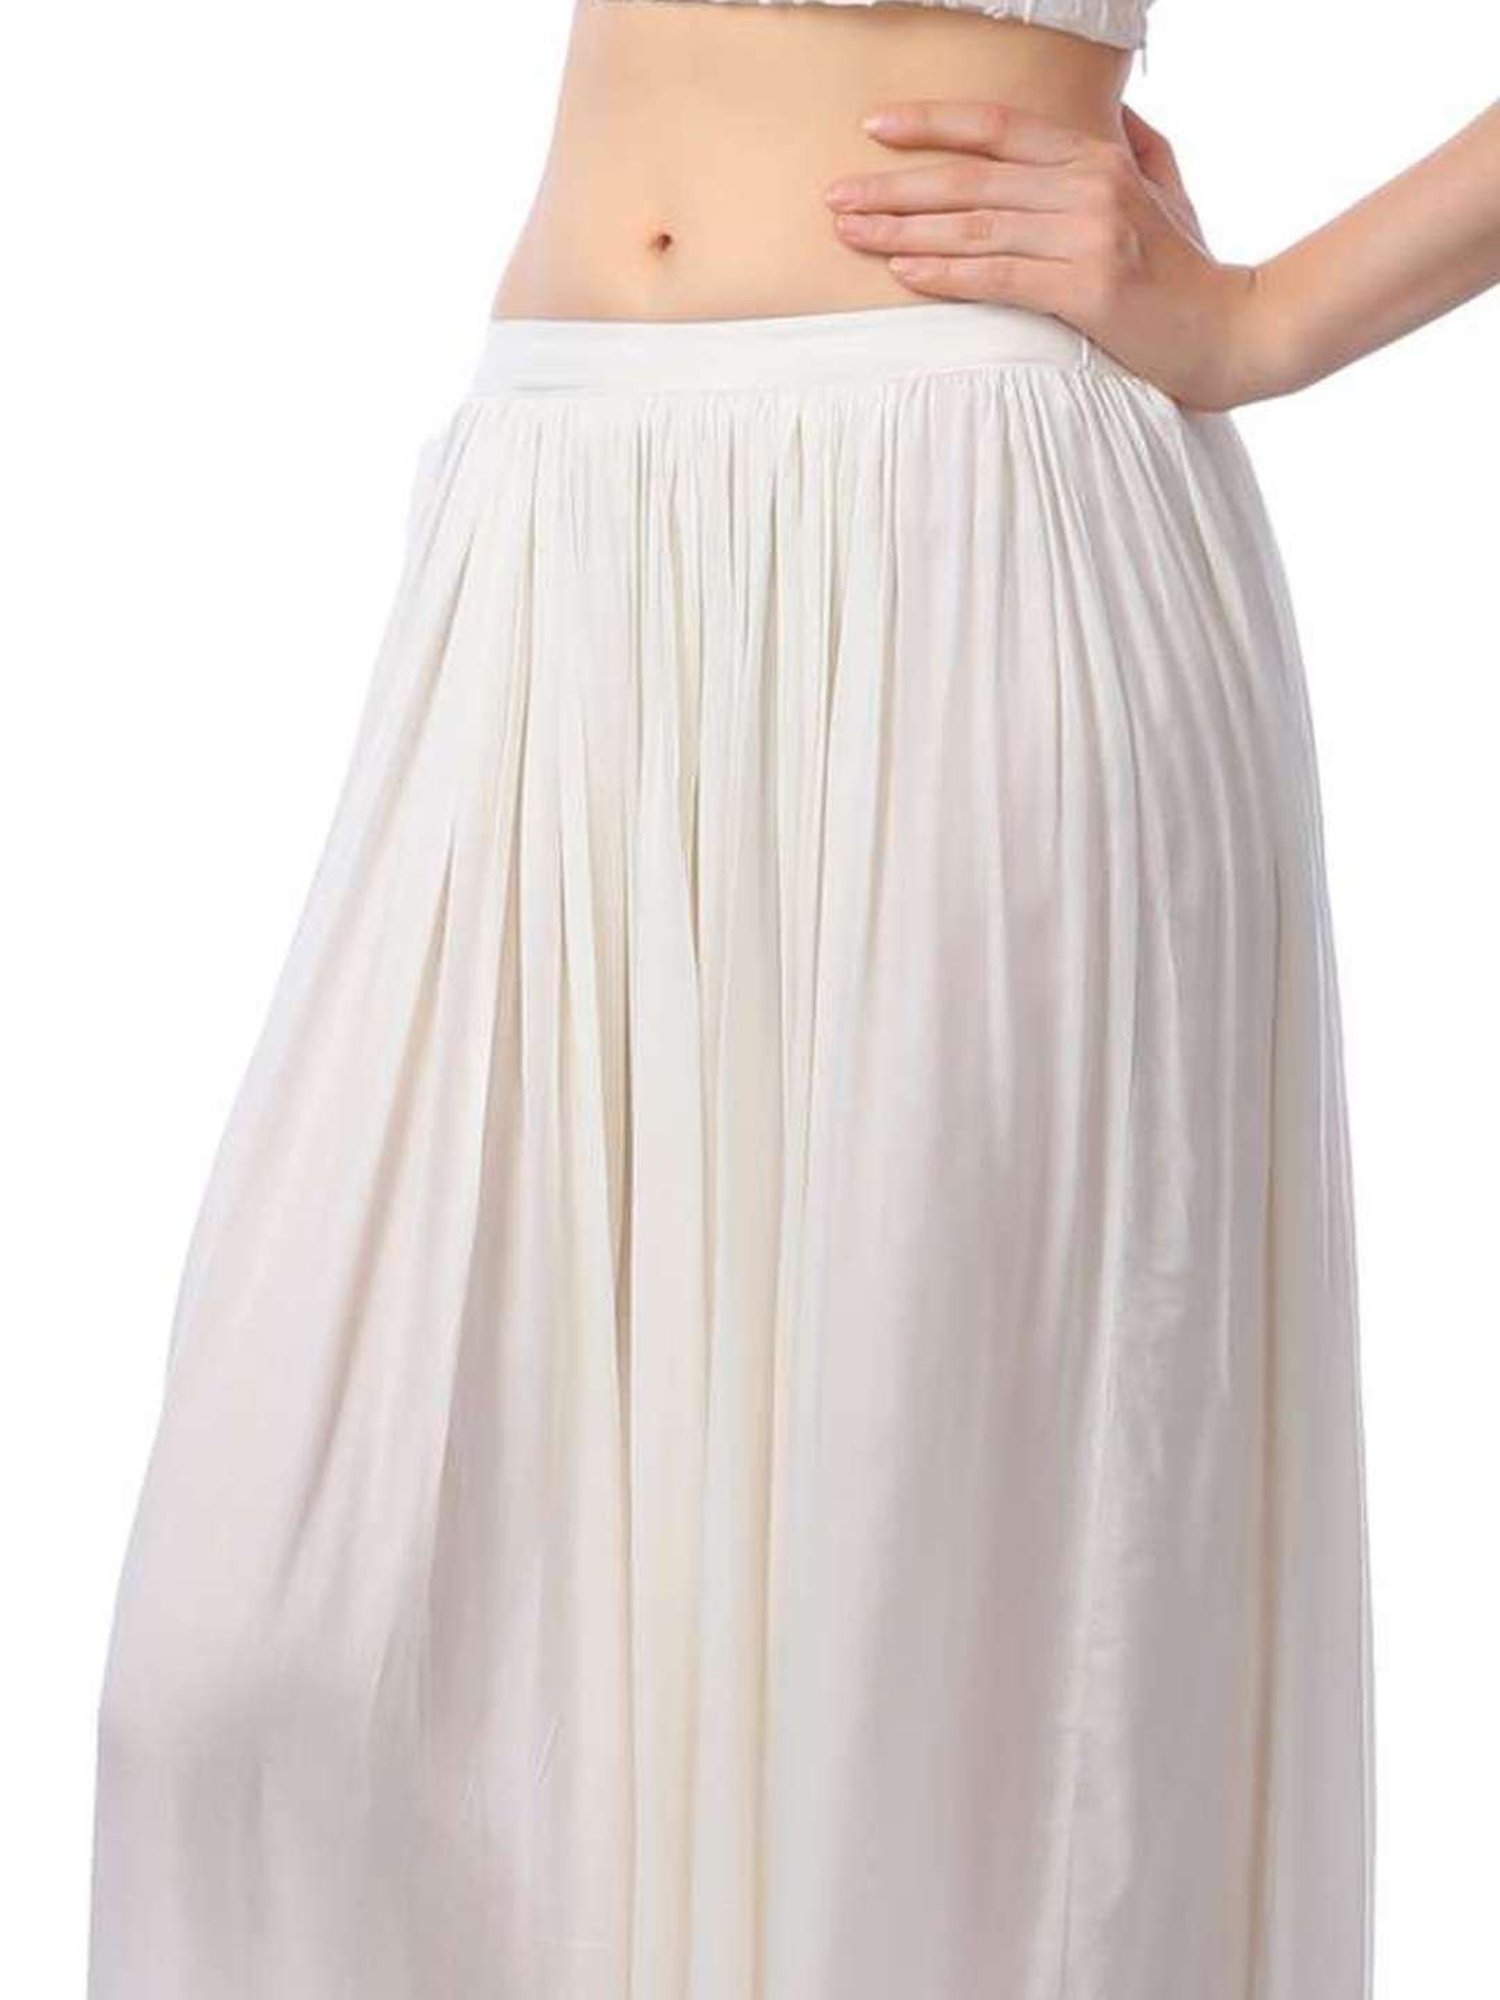 900 - Infinity Skirt / Dress White/Black – India Batik